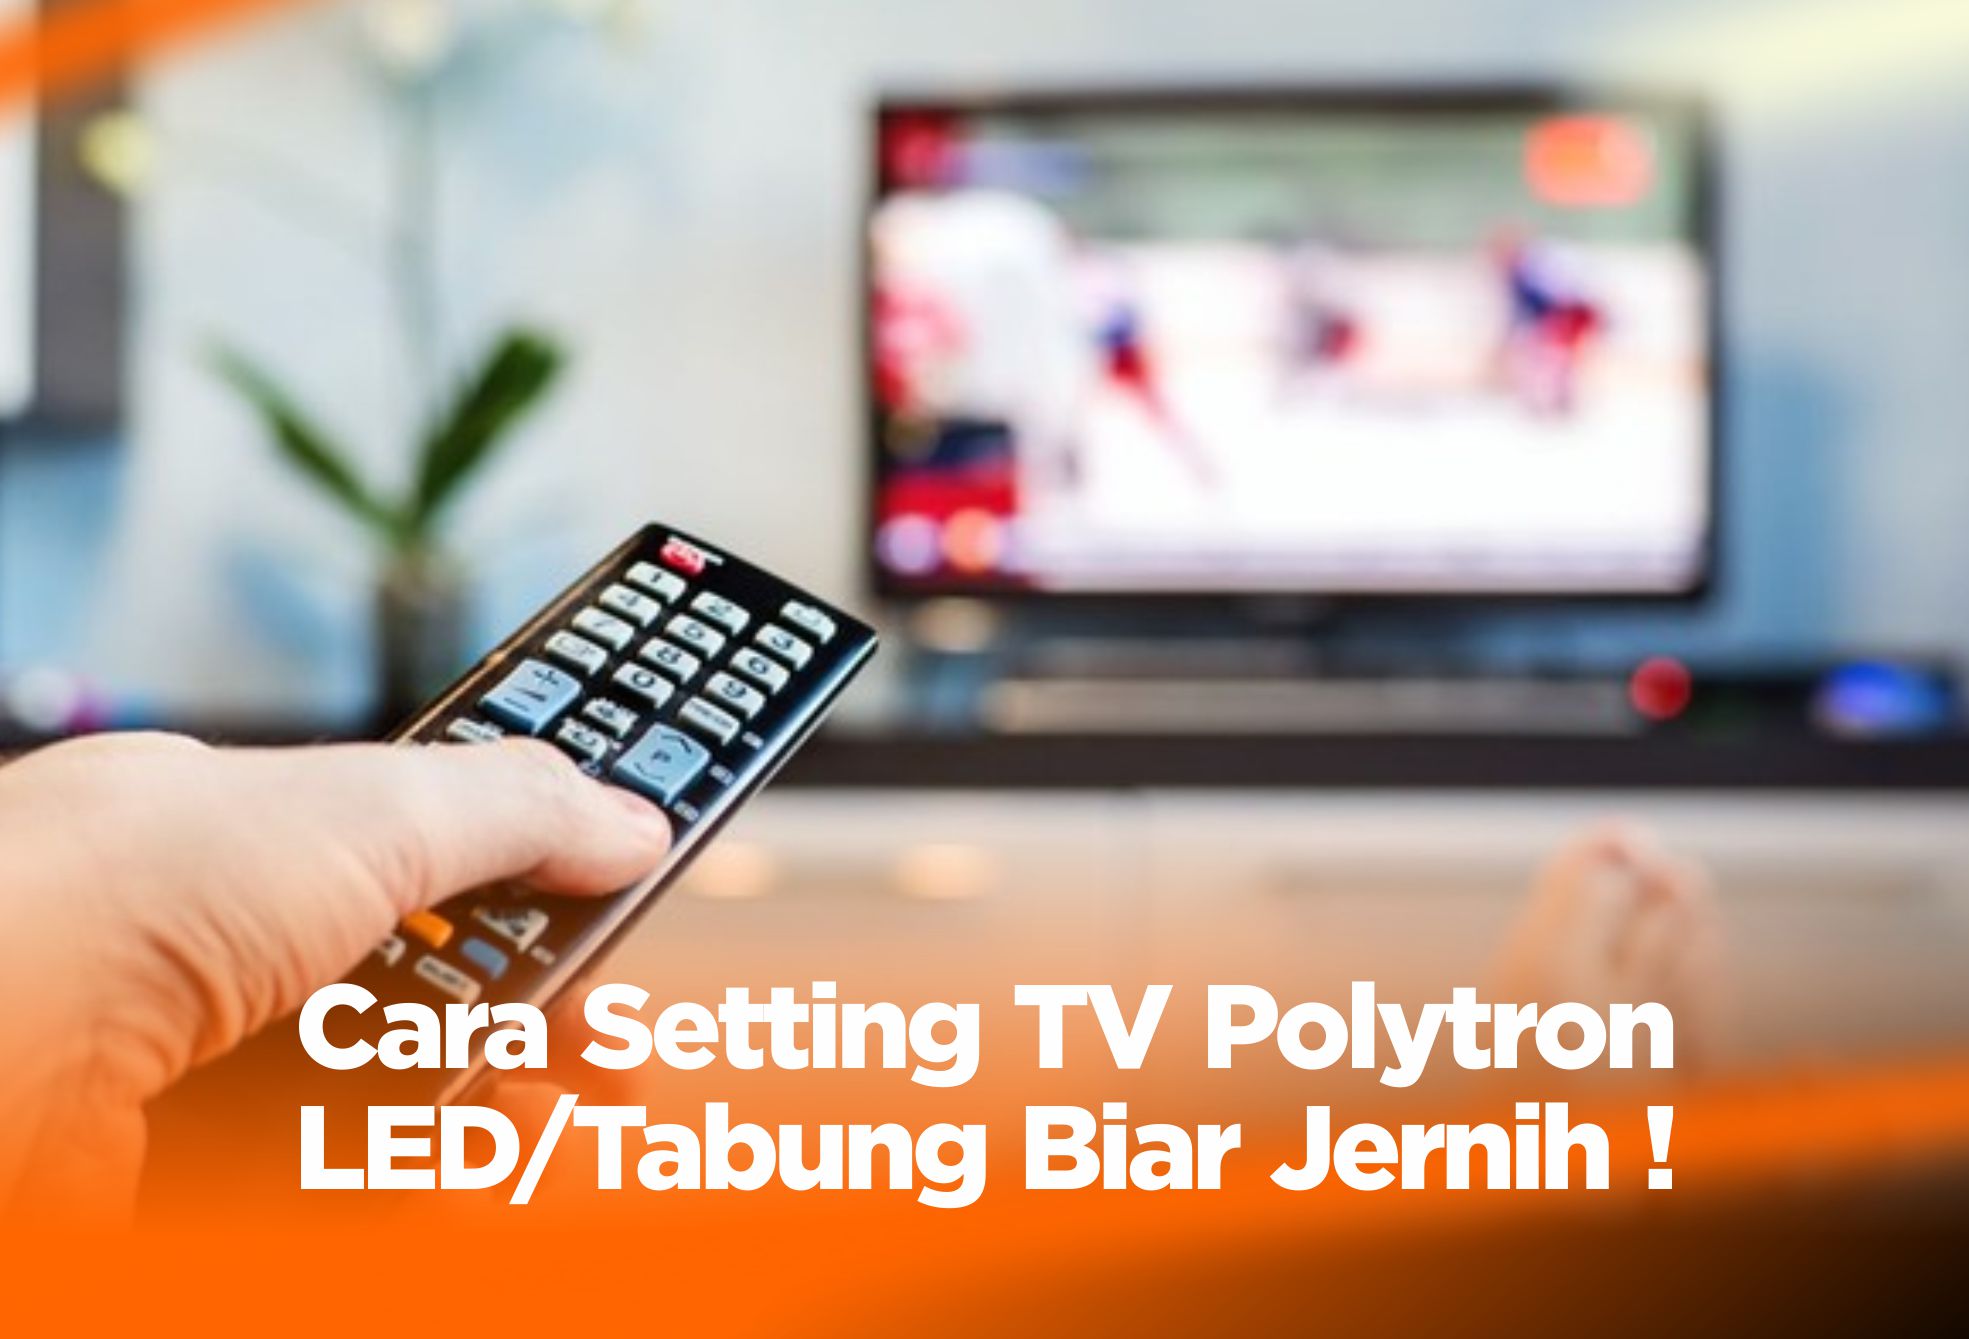 Cara Setting TV Polytron LED/Tabung Biar Jernih !